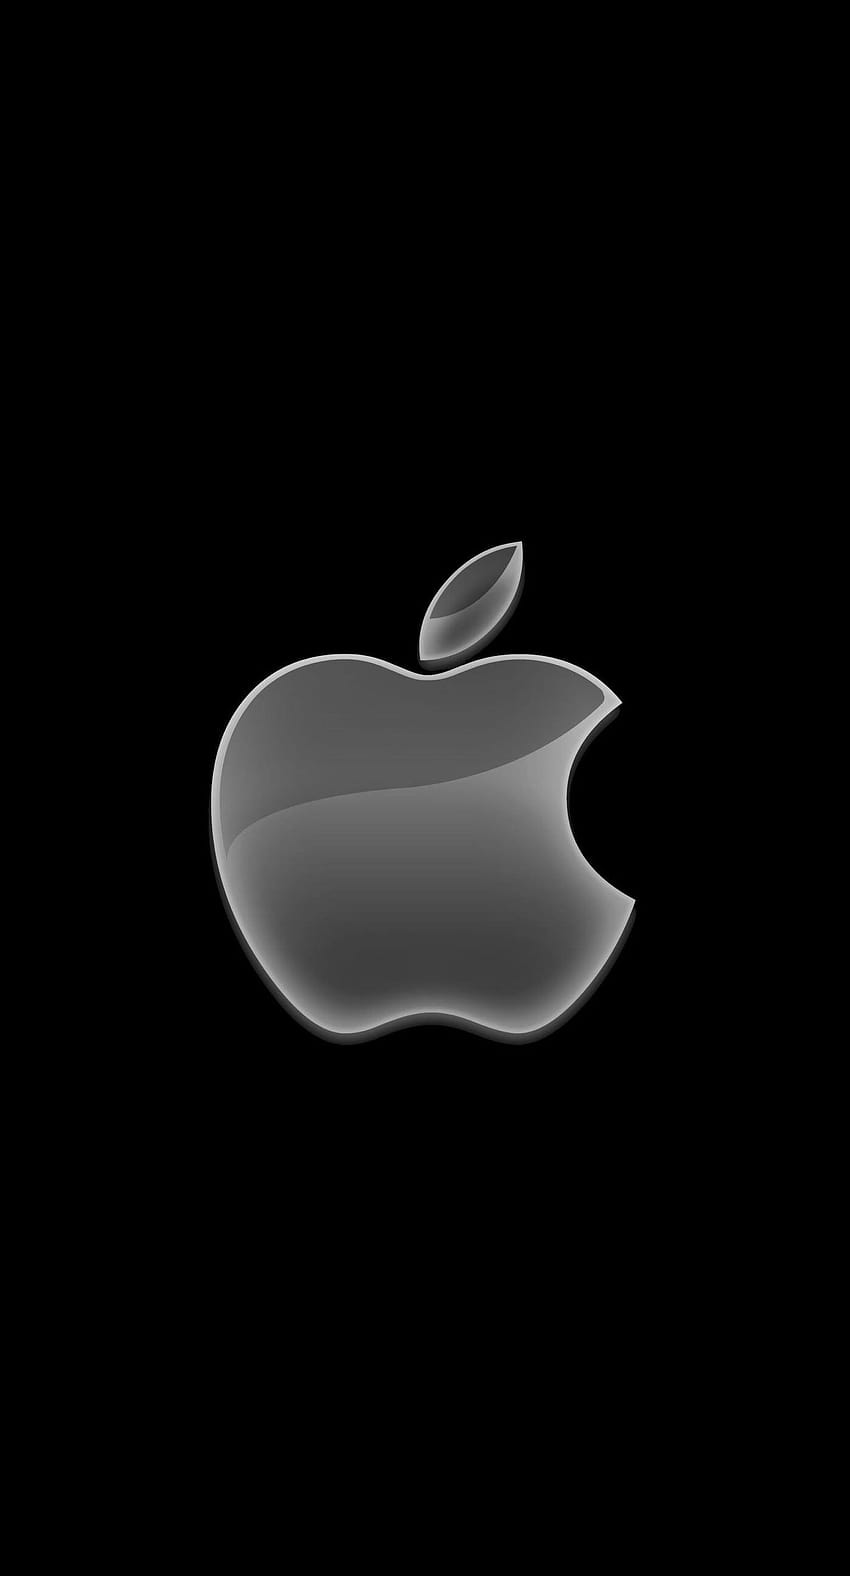 Apple logo negro fresco, iphone negro manzana fondo de pantalla del teléfono